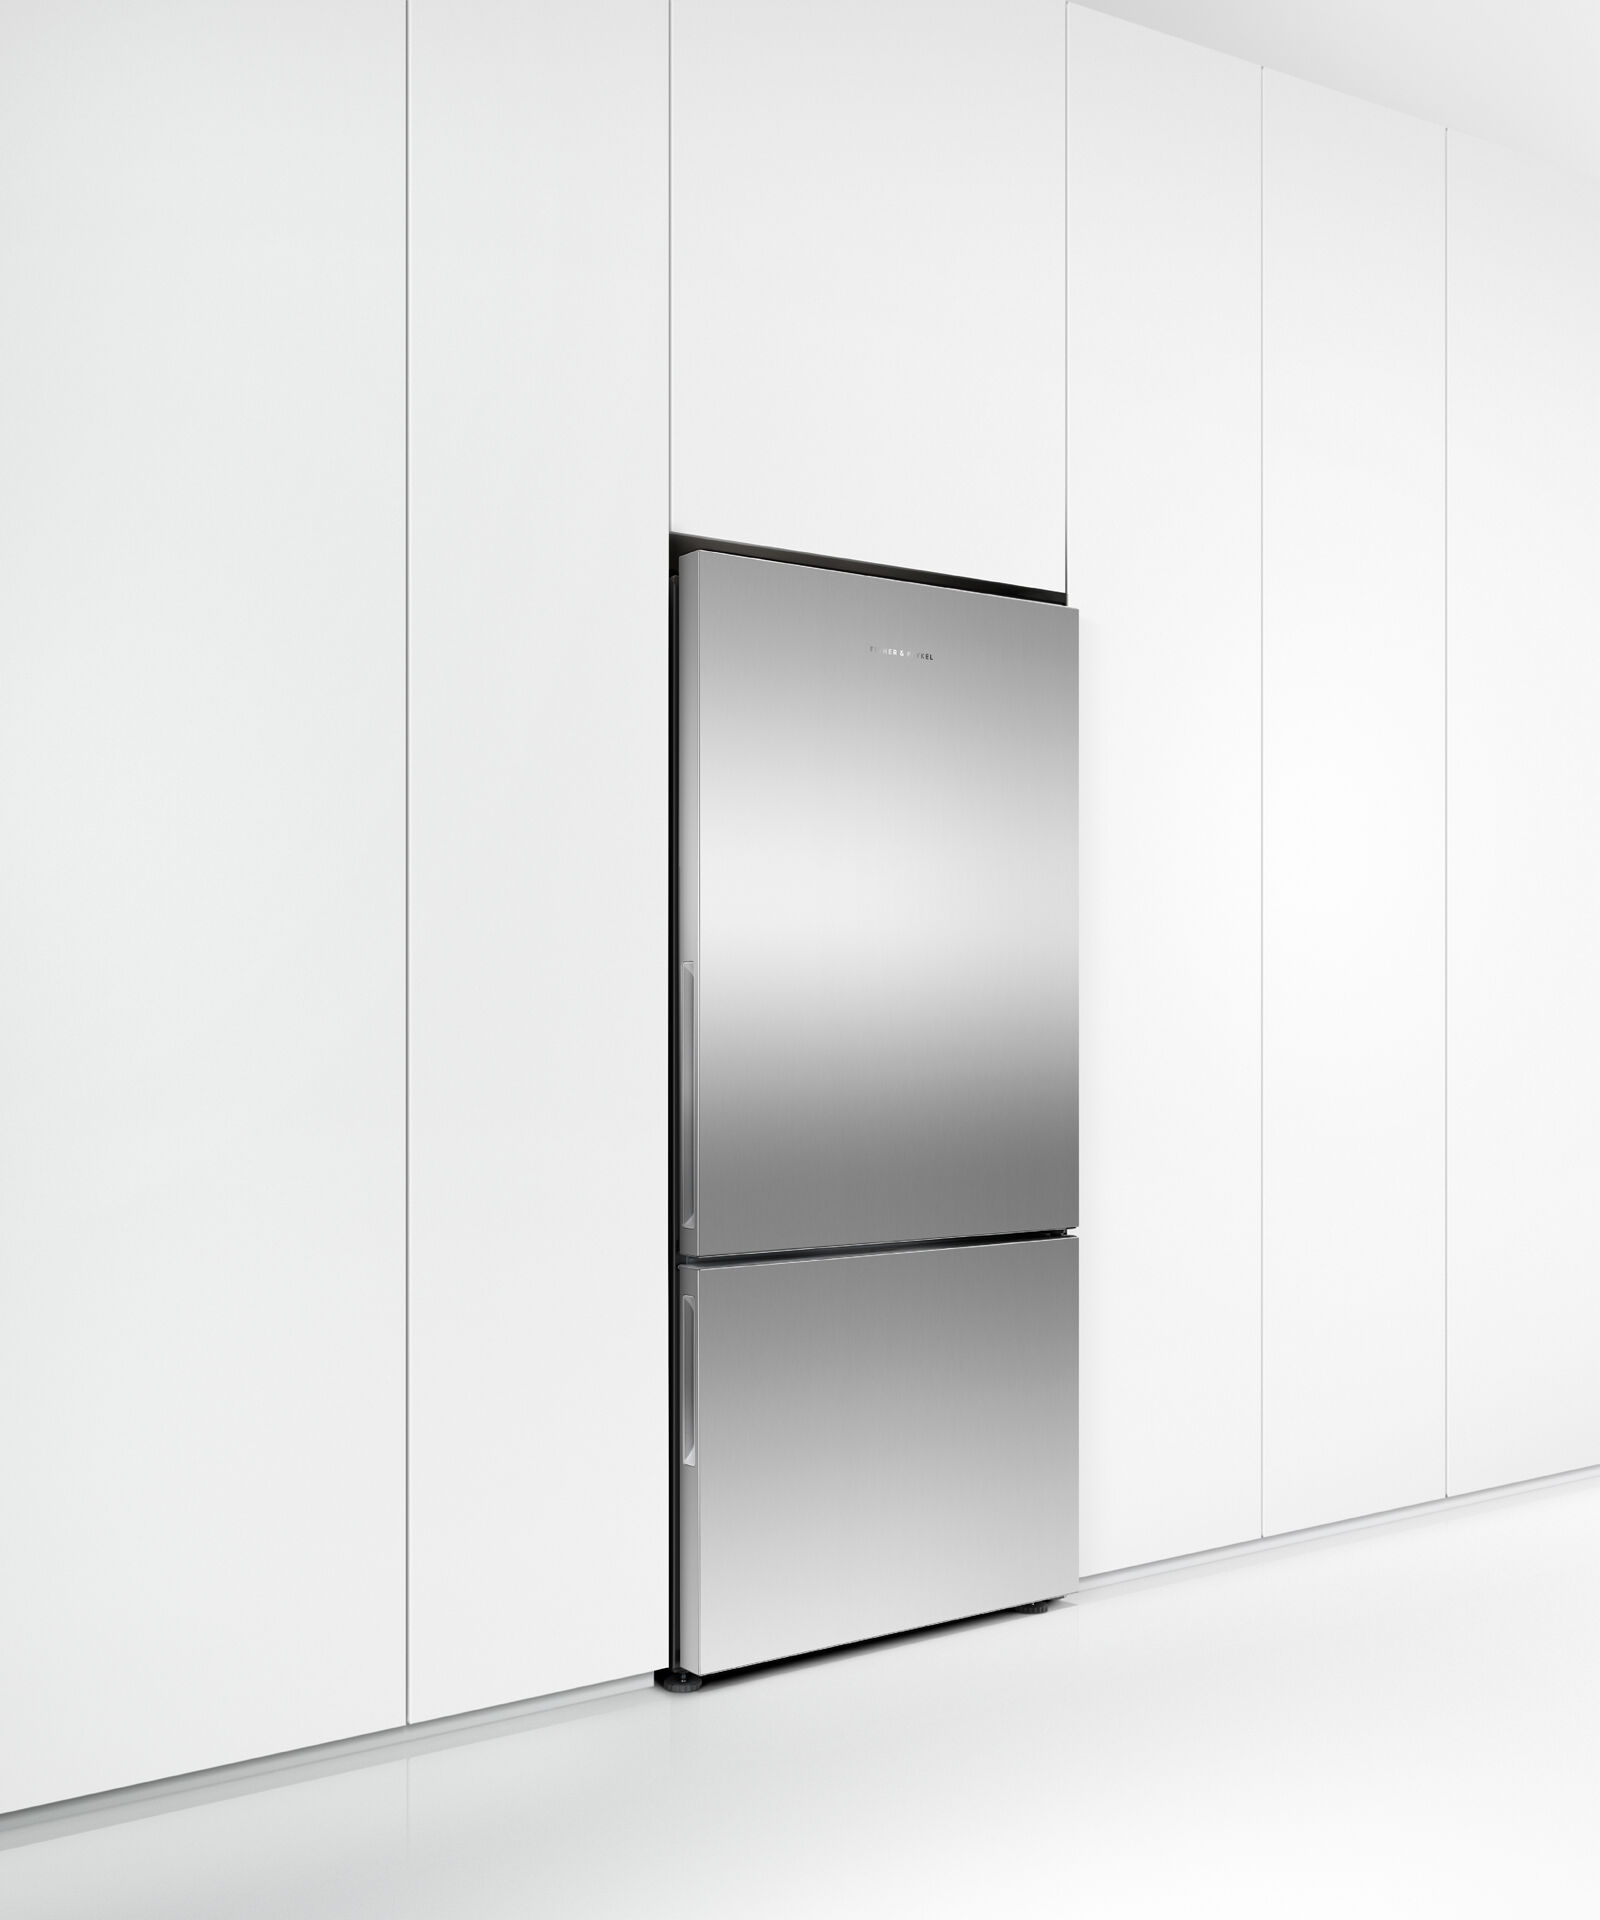 Freestanding Refrigerator Freezer, 79cm gallery image 6.0